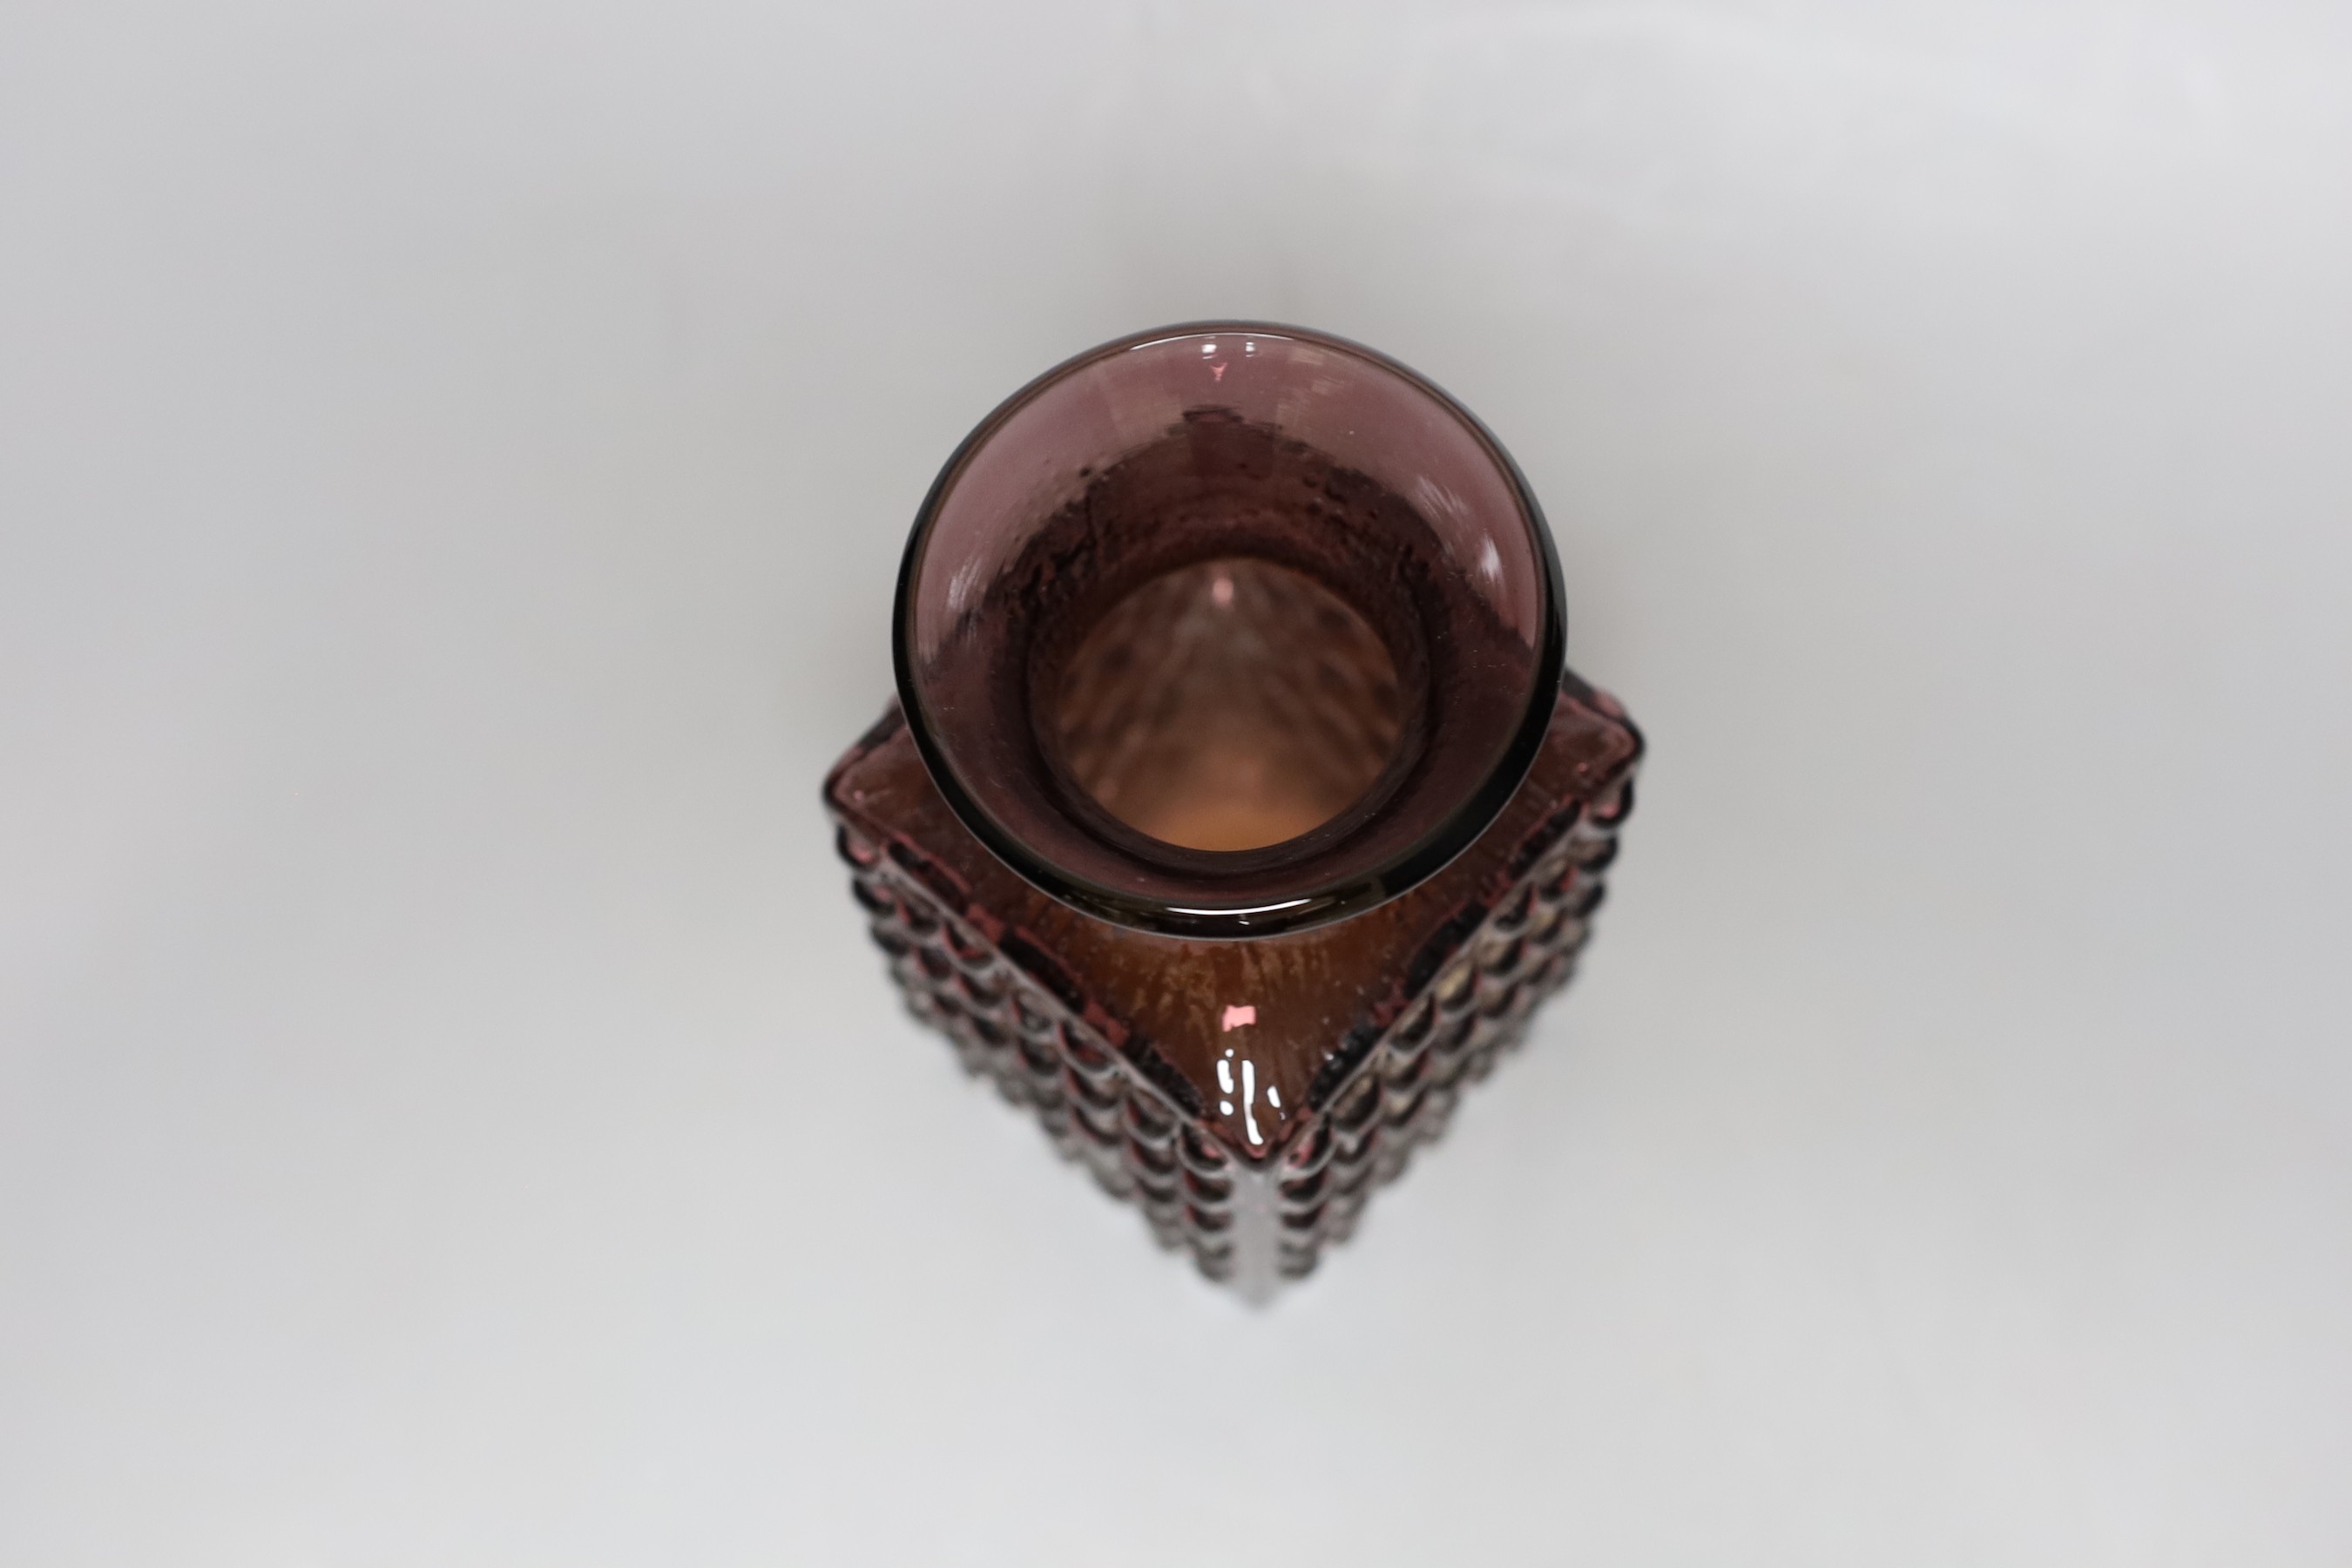 A Whitefriars 'Chess' glass vase, designed by Geoffrey Baxter, dark glass, 15cm tall